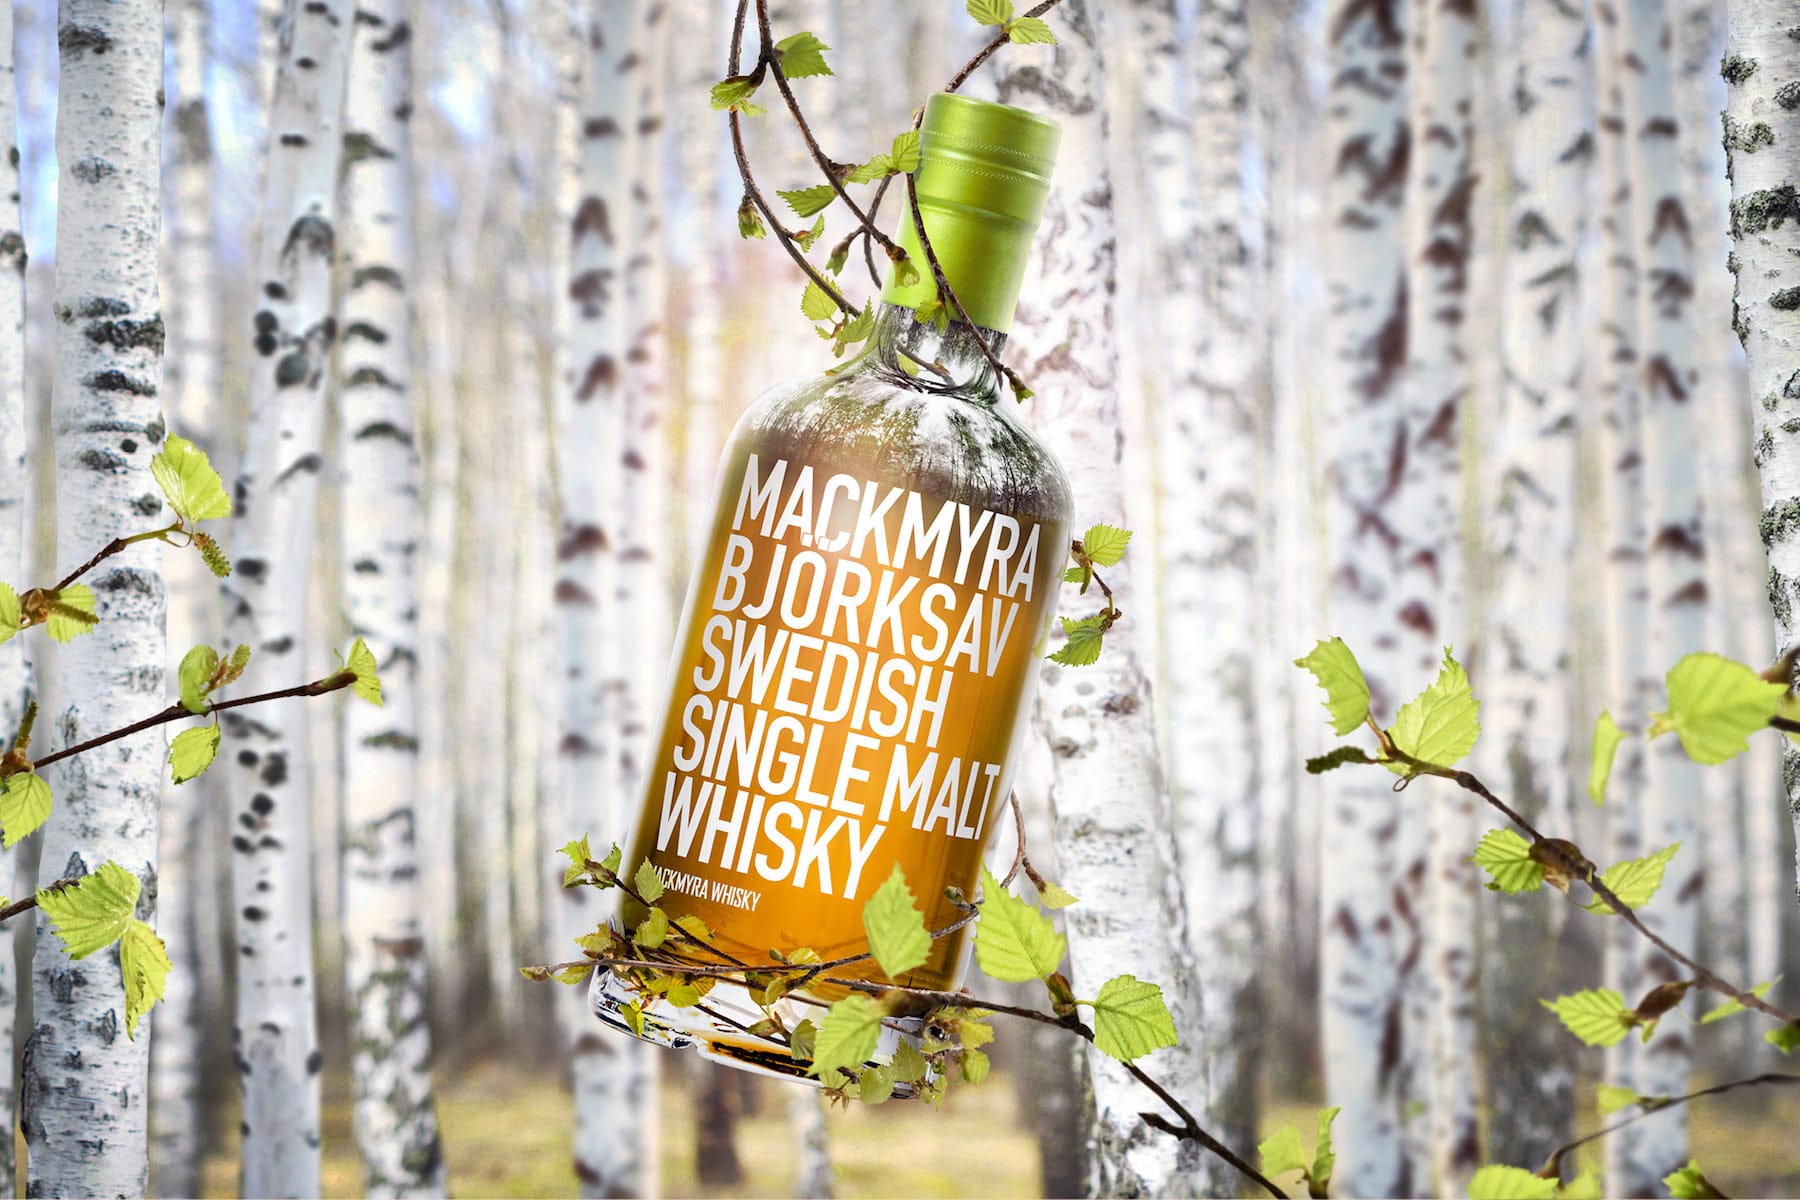 Mackmyra Bjorksav Swedish Single Malt Whisky Birch Sap Wine Cask